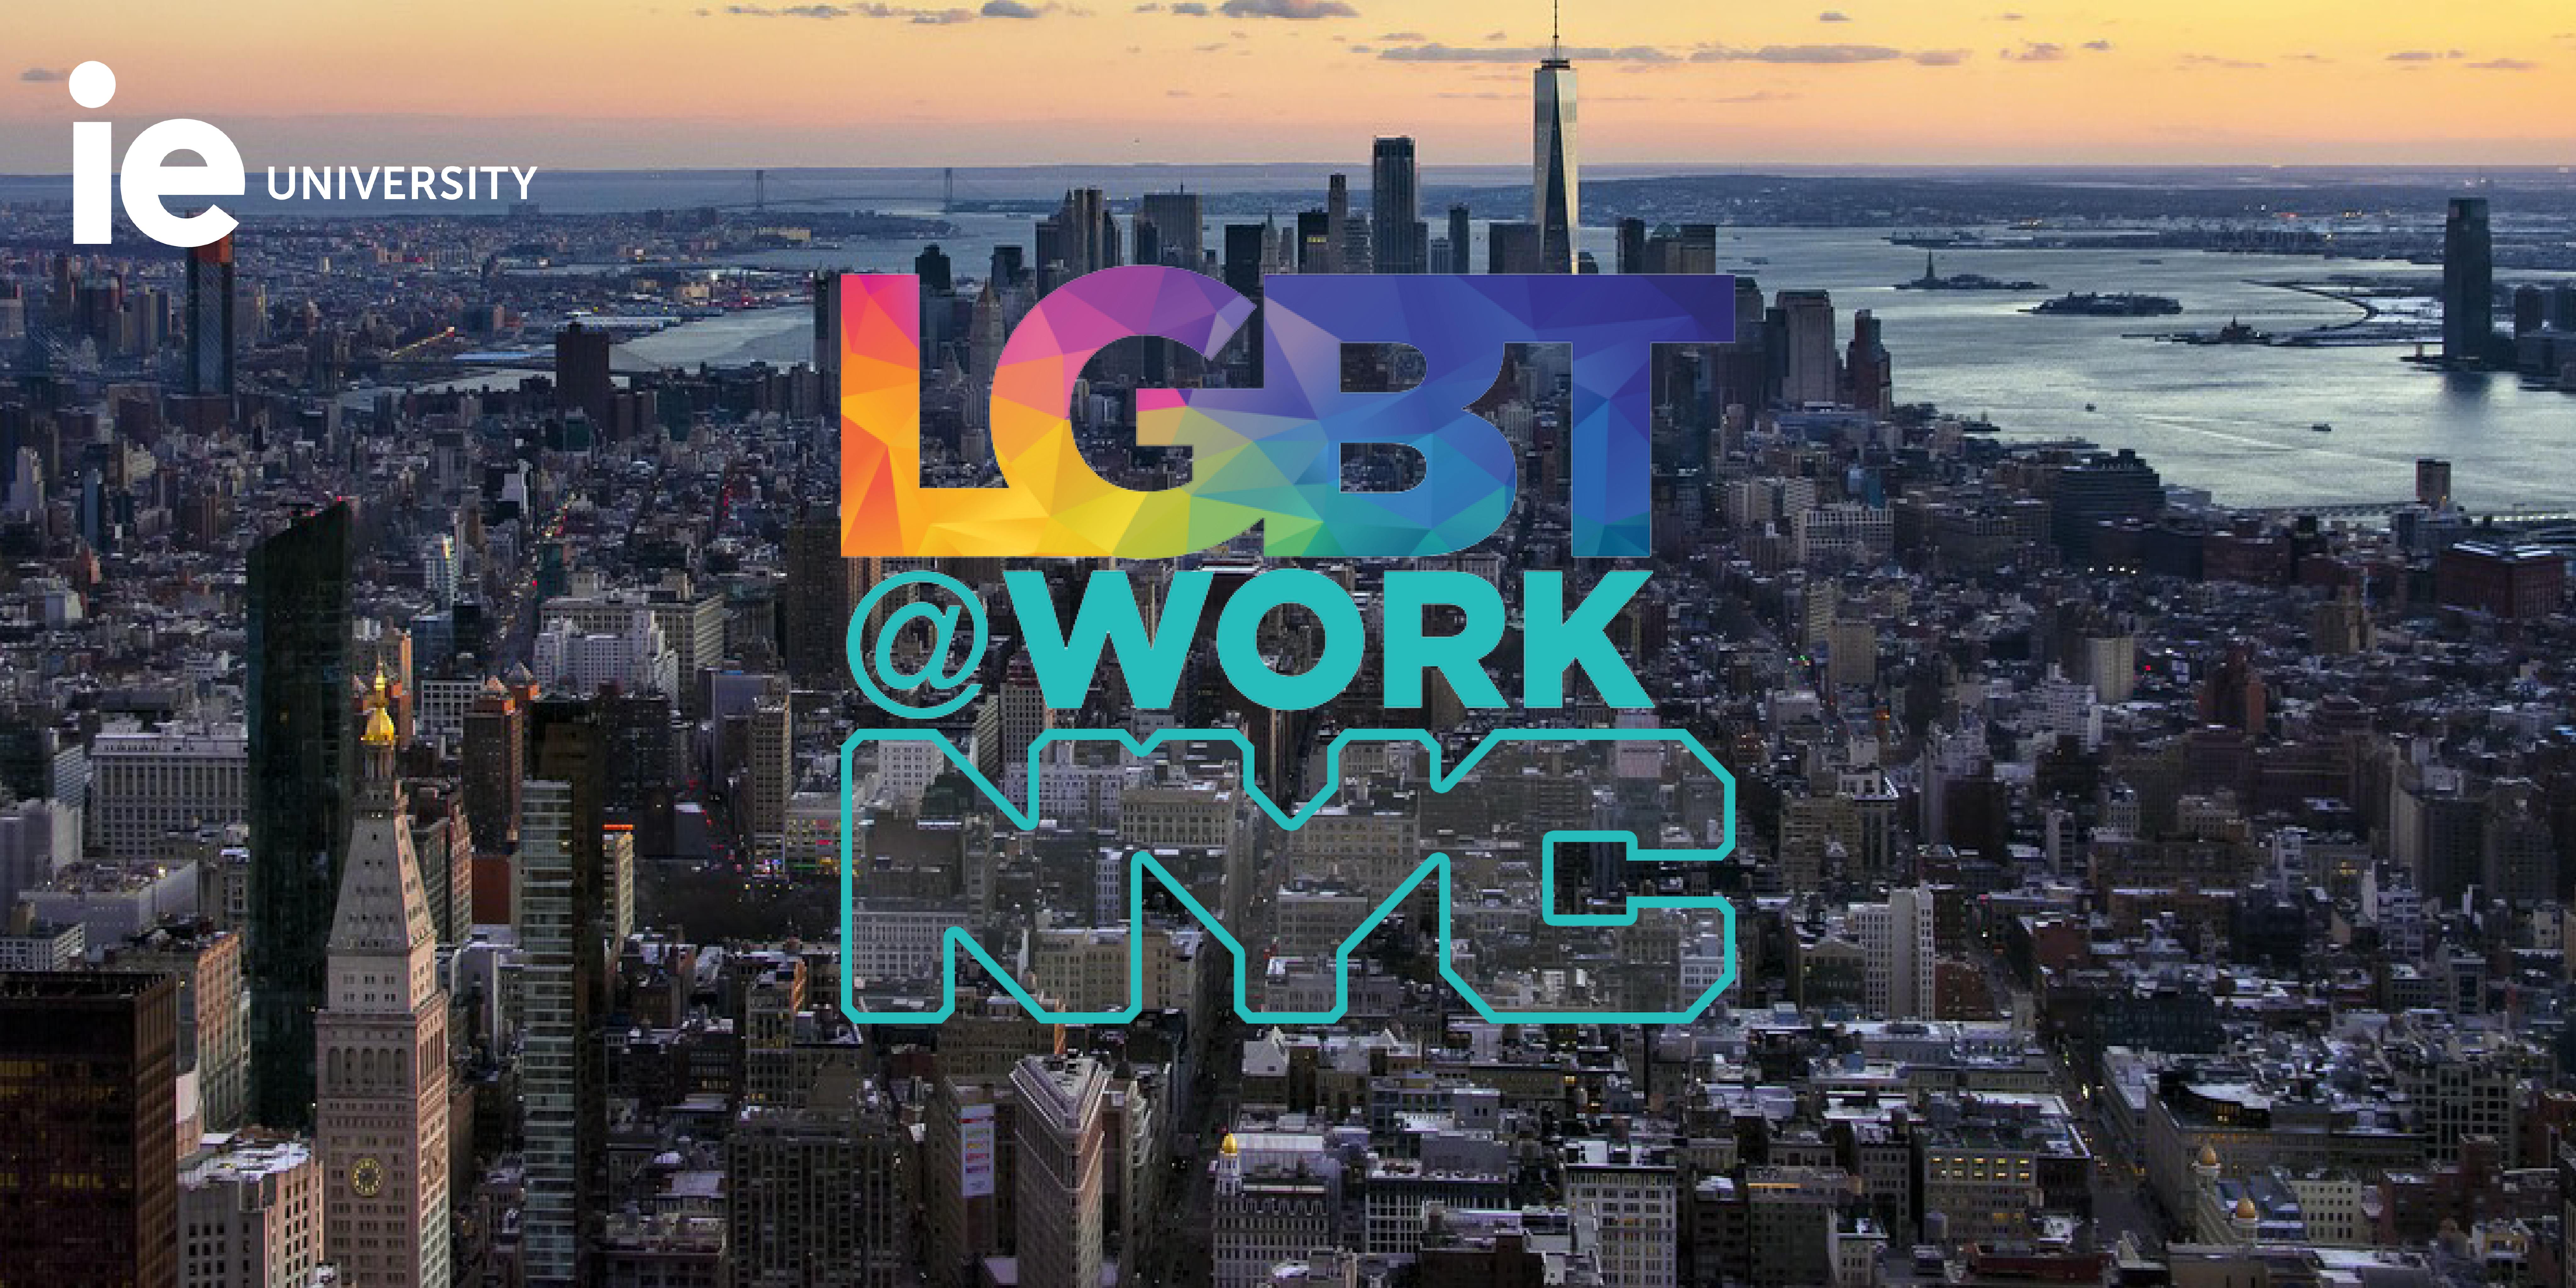 IE LGBT@Work NYC